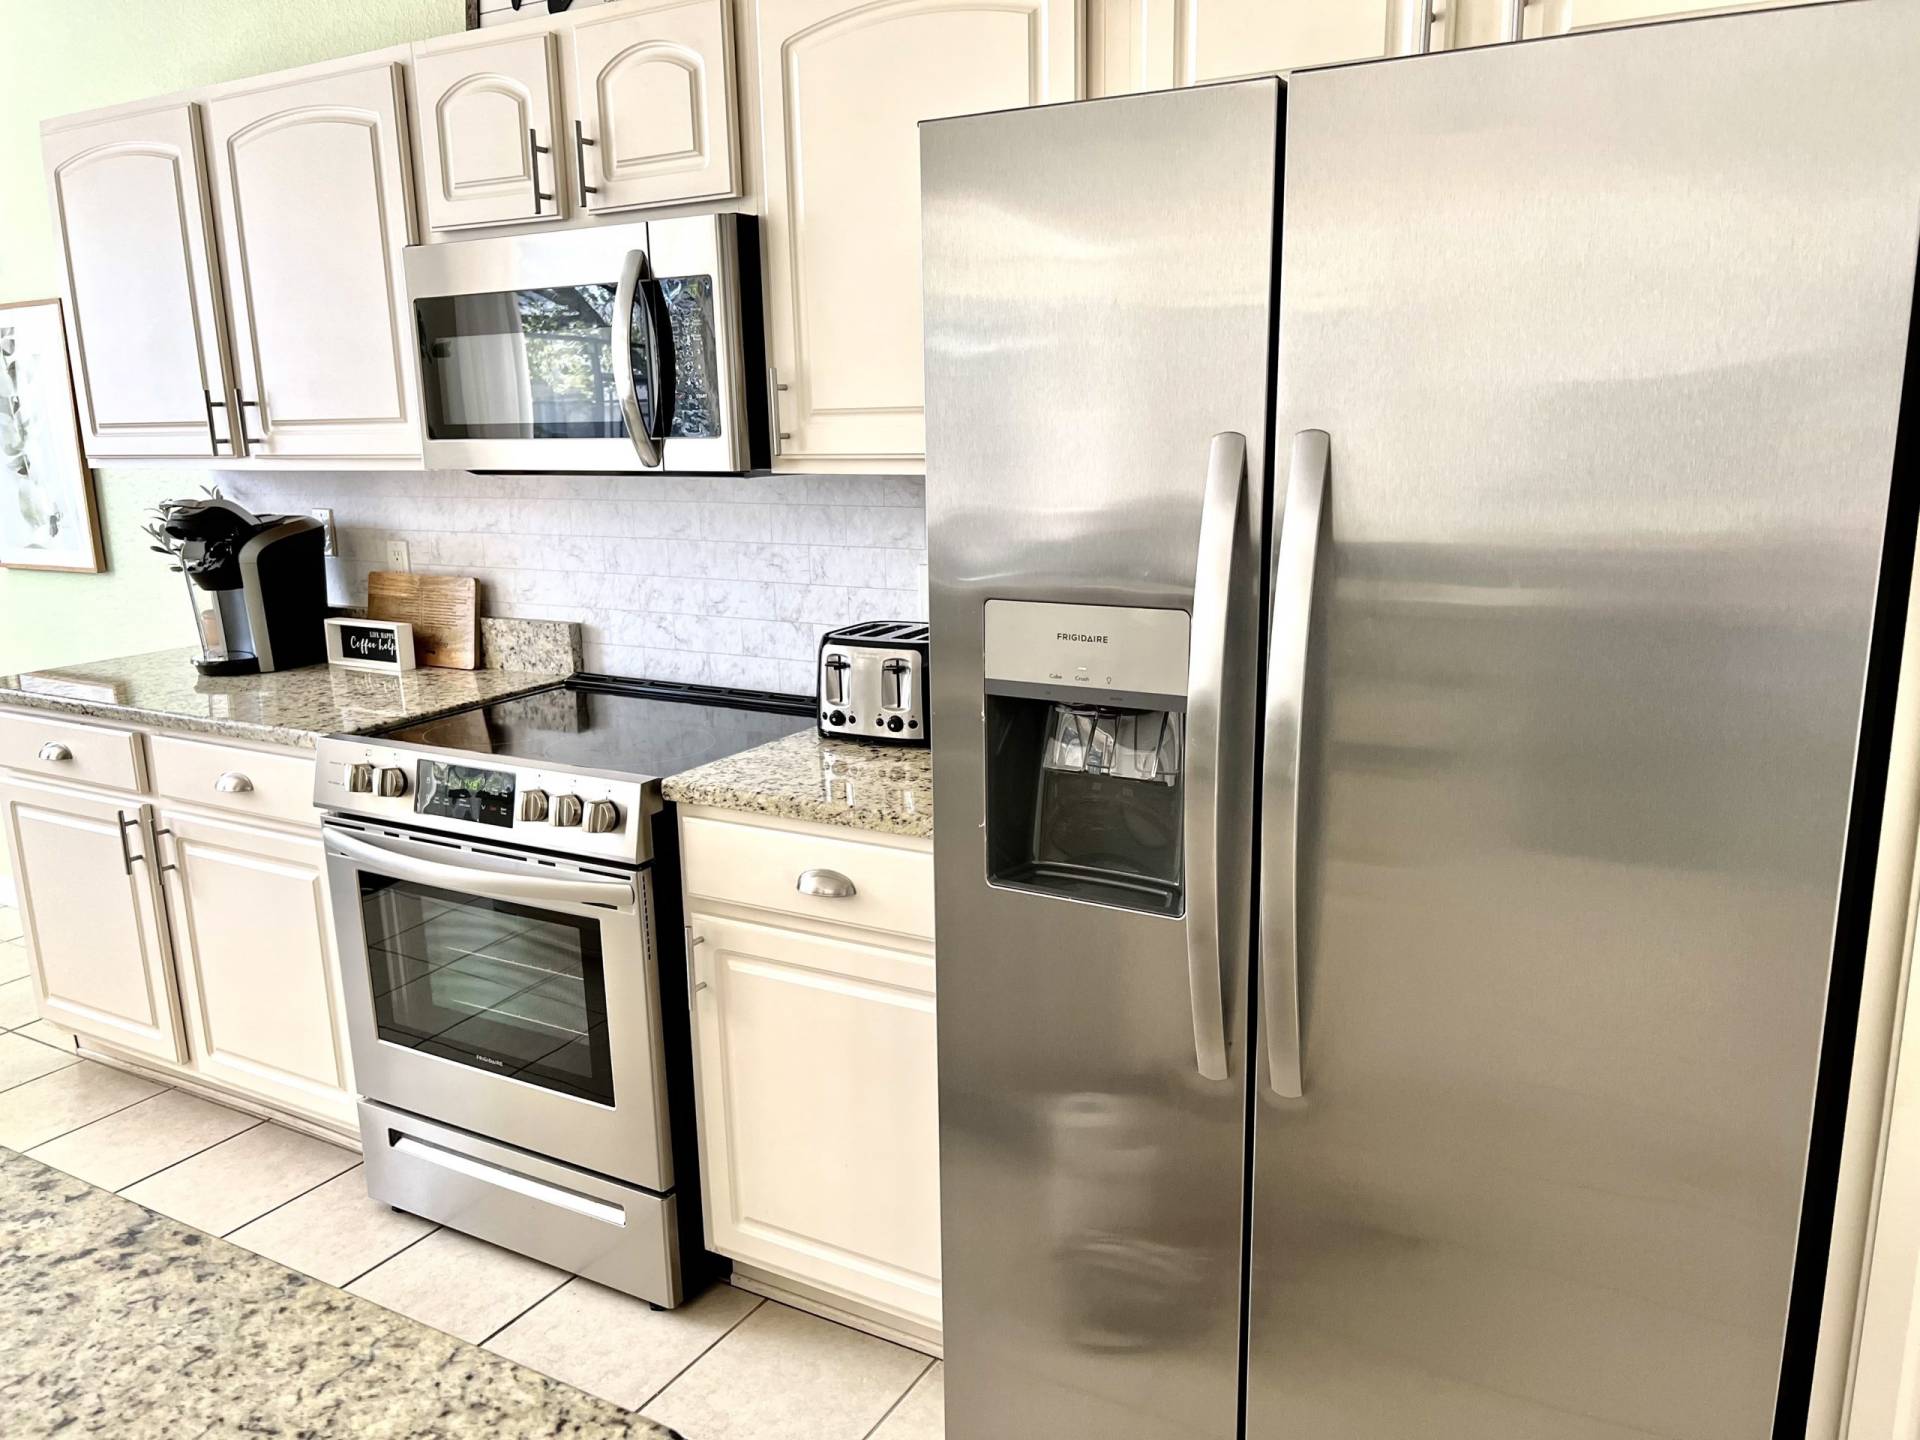 Memory Lane Villa Vacation Rental Home in Windsor Hills Florida Full Sized Refrigerator 